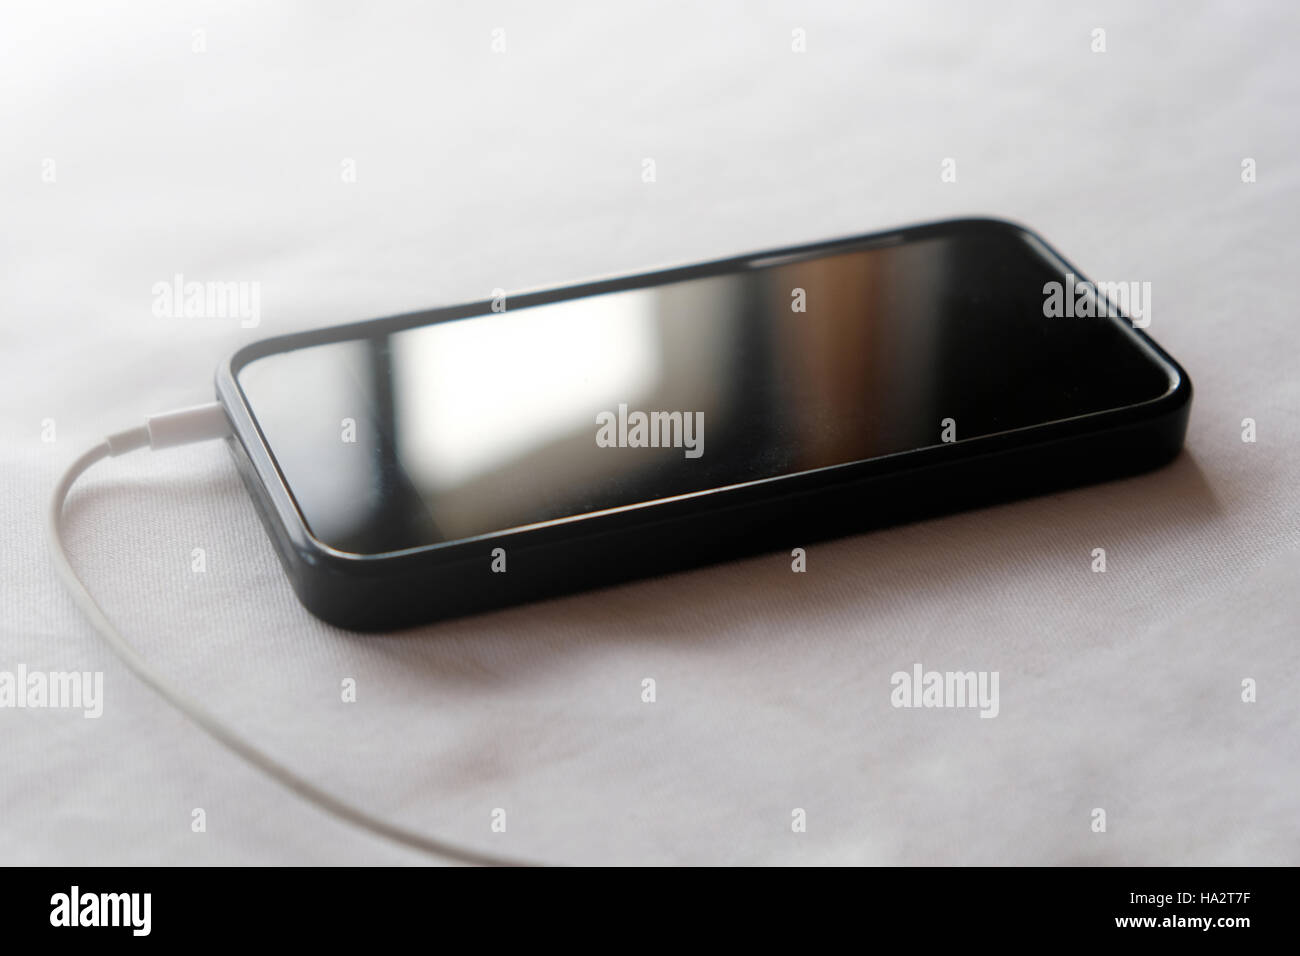 black mobile phone / smart phone charging Stock Photo